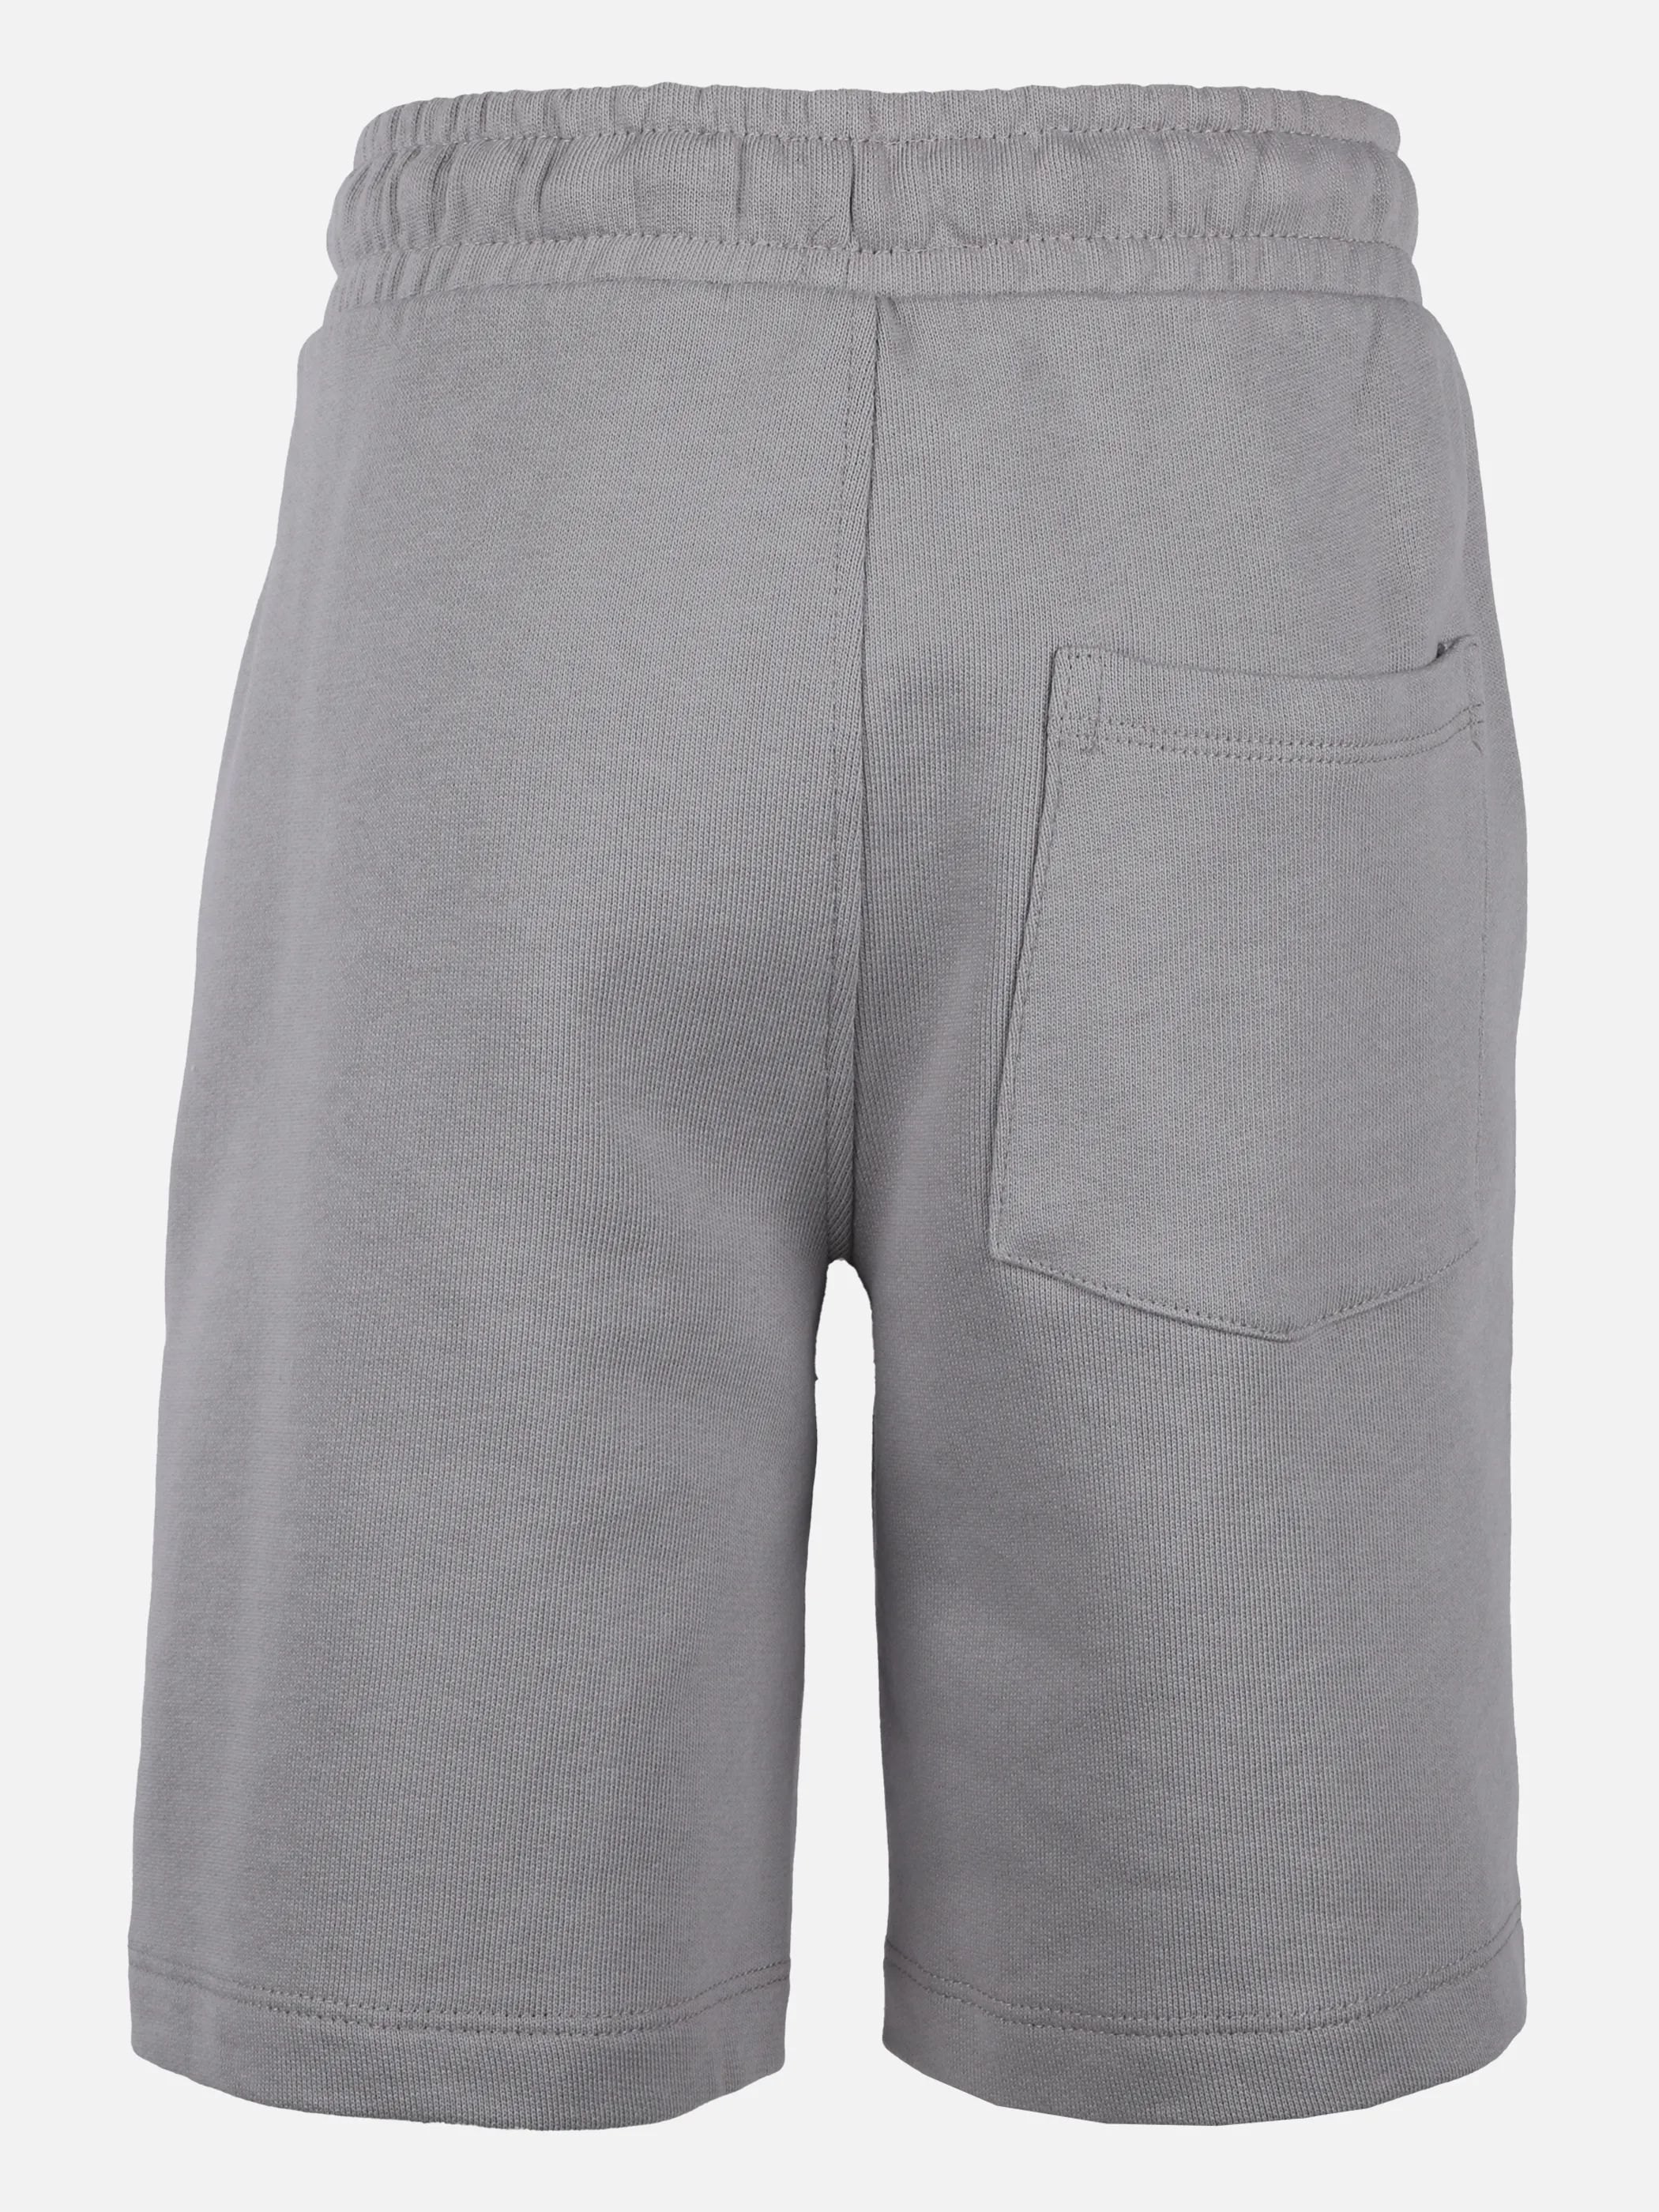 Tom Tailor 1031884 printed sweat shorts Grau 865872 17590 2